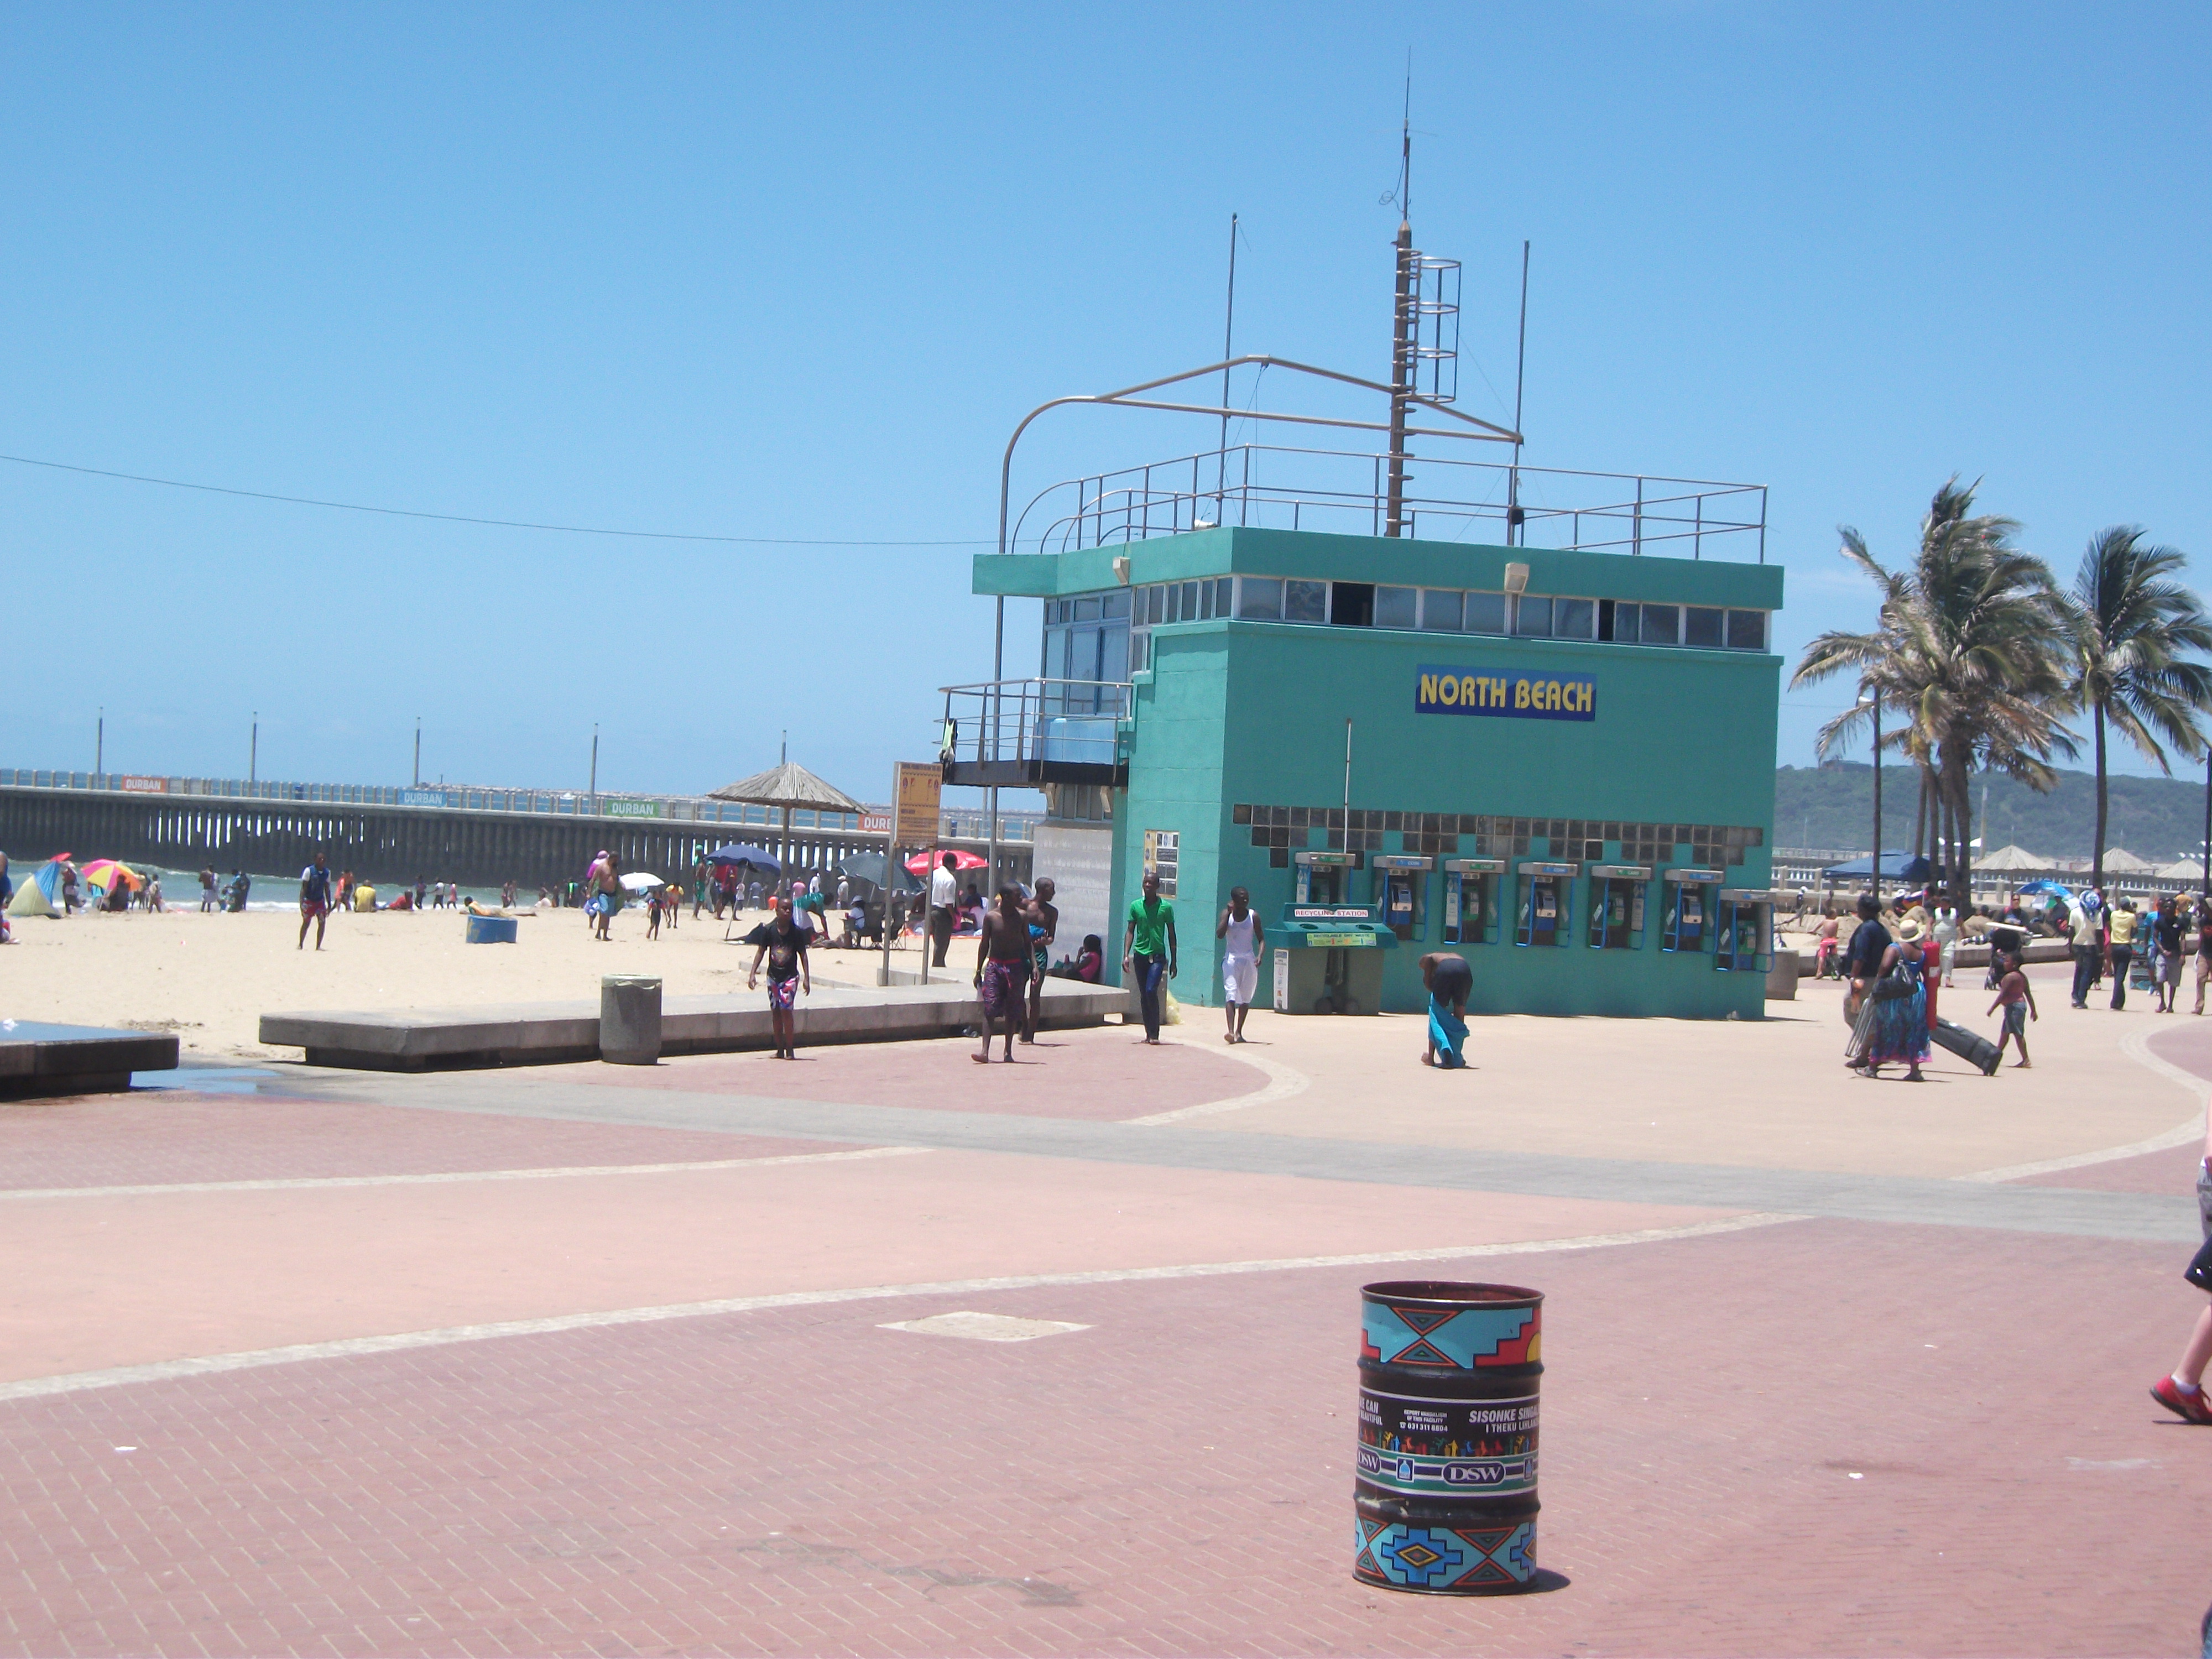 https://upload.wikimedia.org/wikipedia/commons/0/08/North_Beach_in_Durban.jpeg